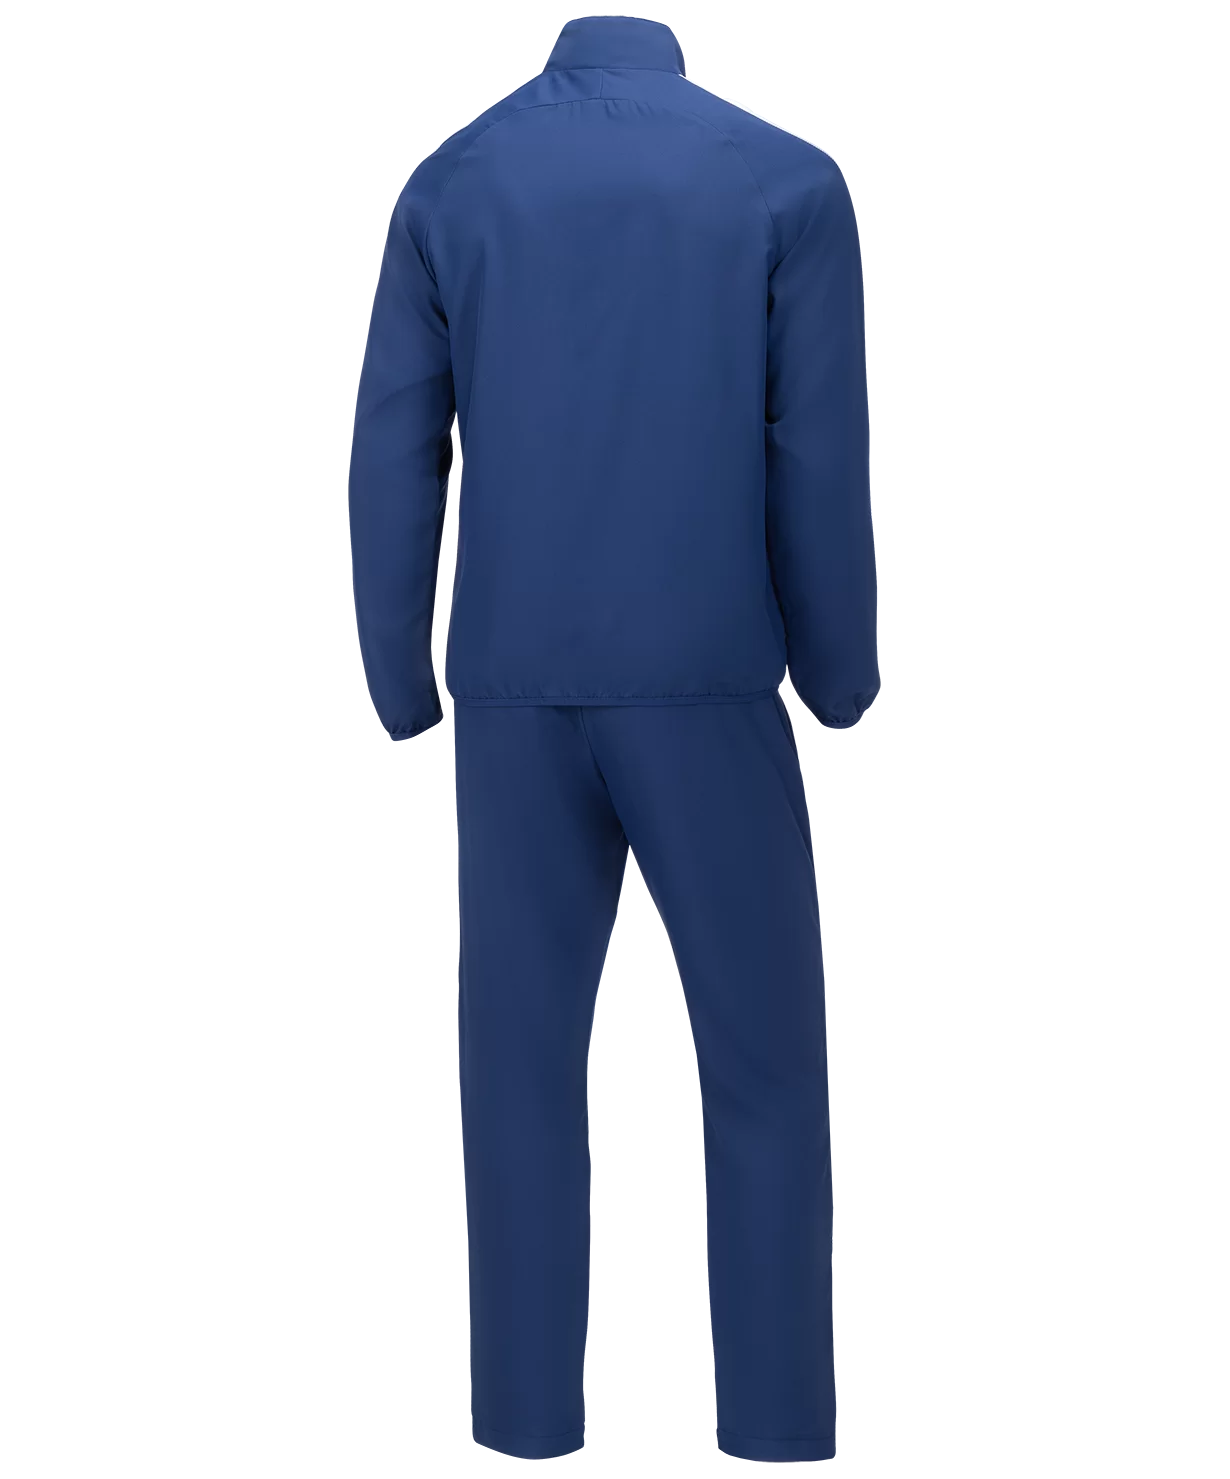 Фото Костюм спортивный CAMP Lined Suit, темно-синий/темно-синий Jögel со склада магазина СпортЕВ